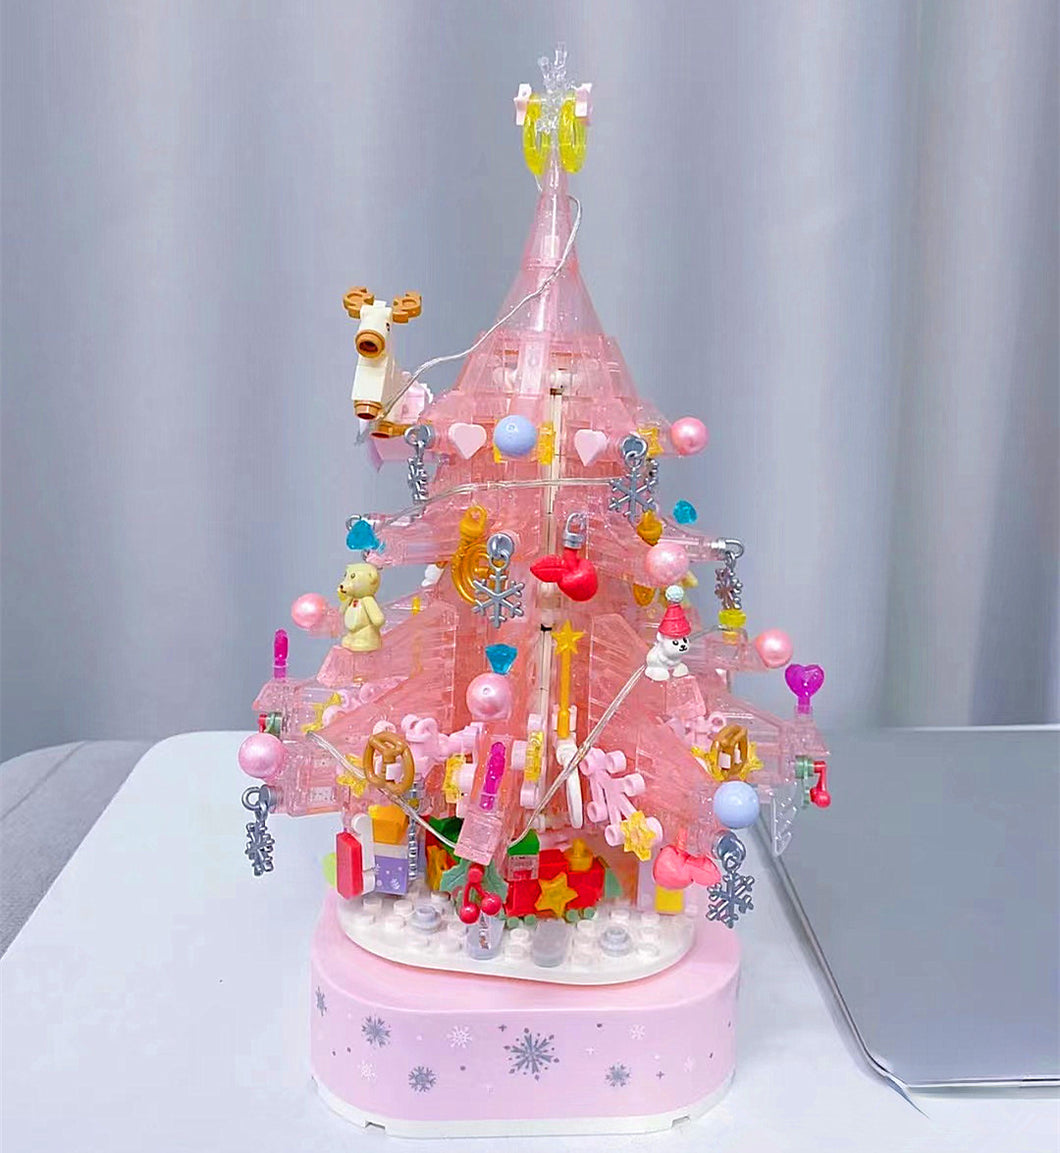 Sembo Blocks Kids Building Toys Girls Puzzle Music Box Christmas Tree Holiday Gift Home Decor 605024